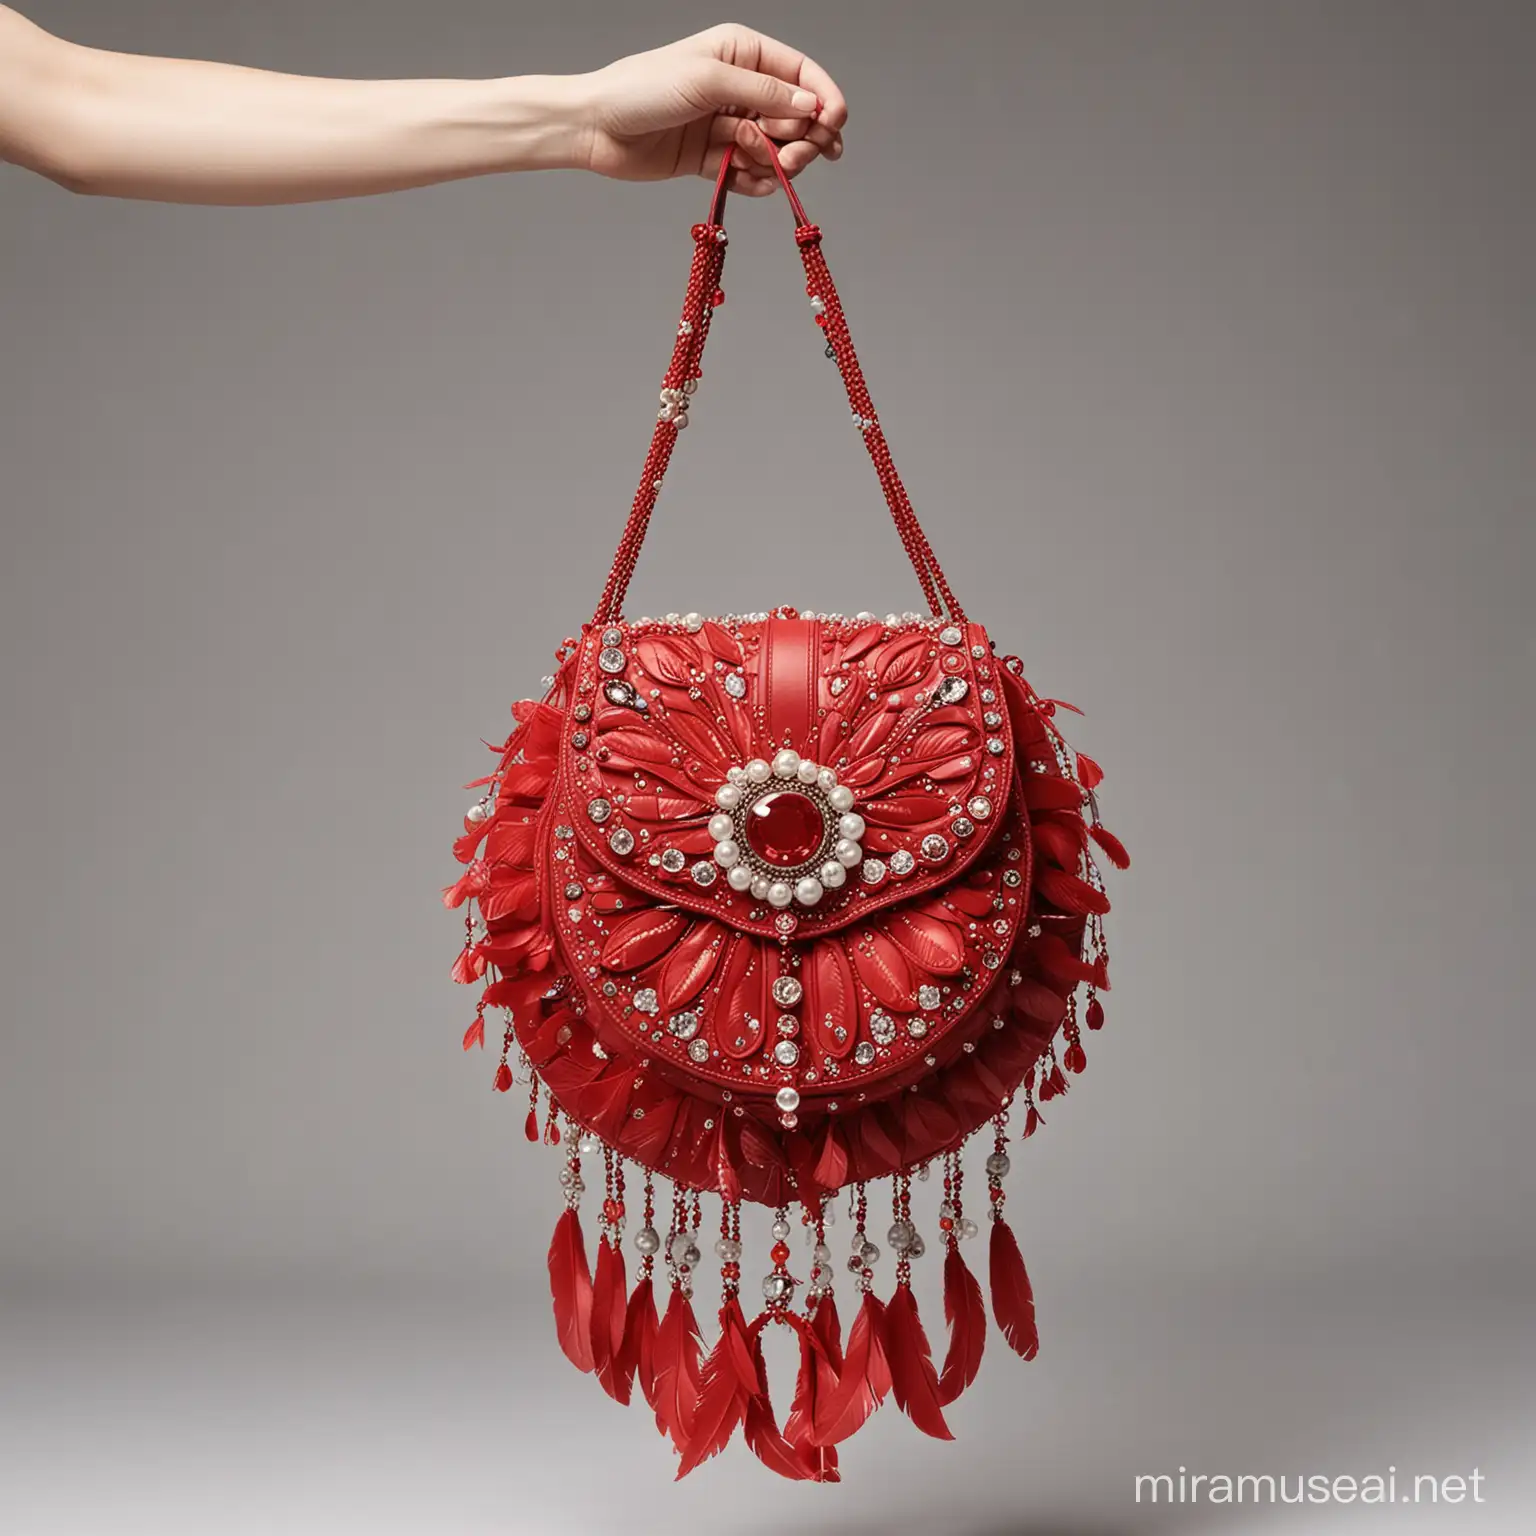 Luxurious Red Diamond and Phoenix Feather Handbag Fashion Accessory